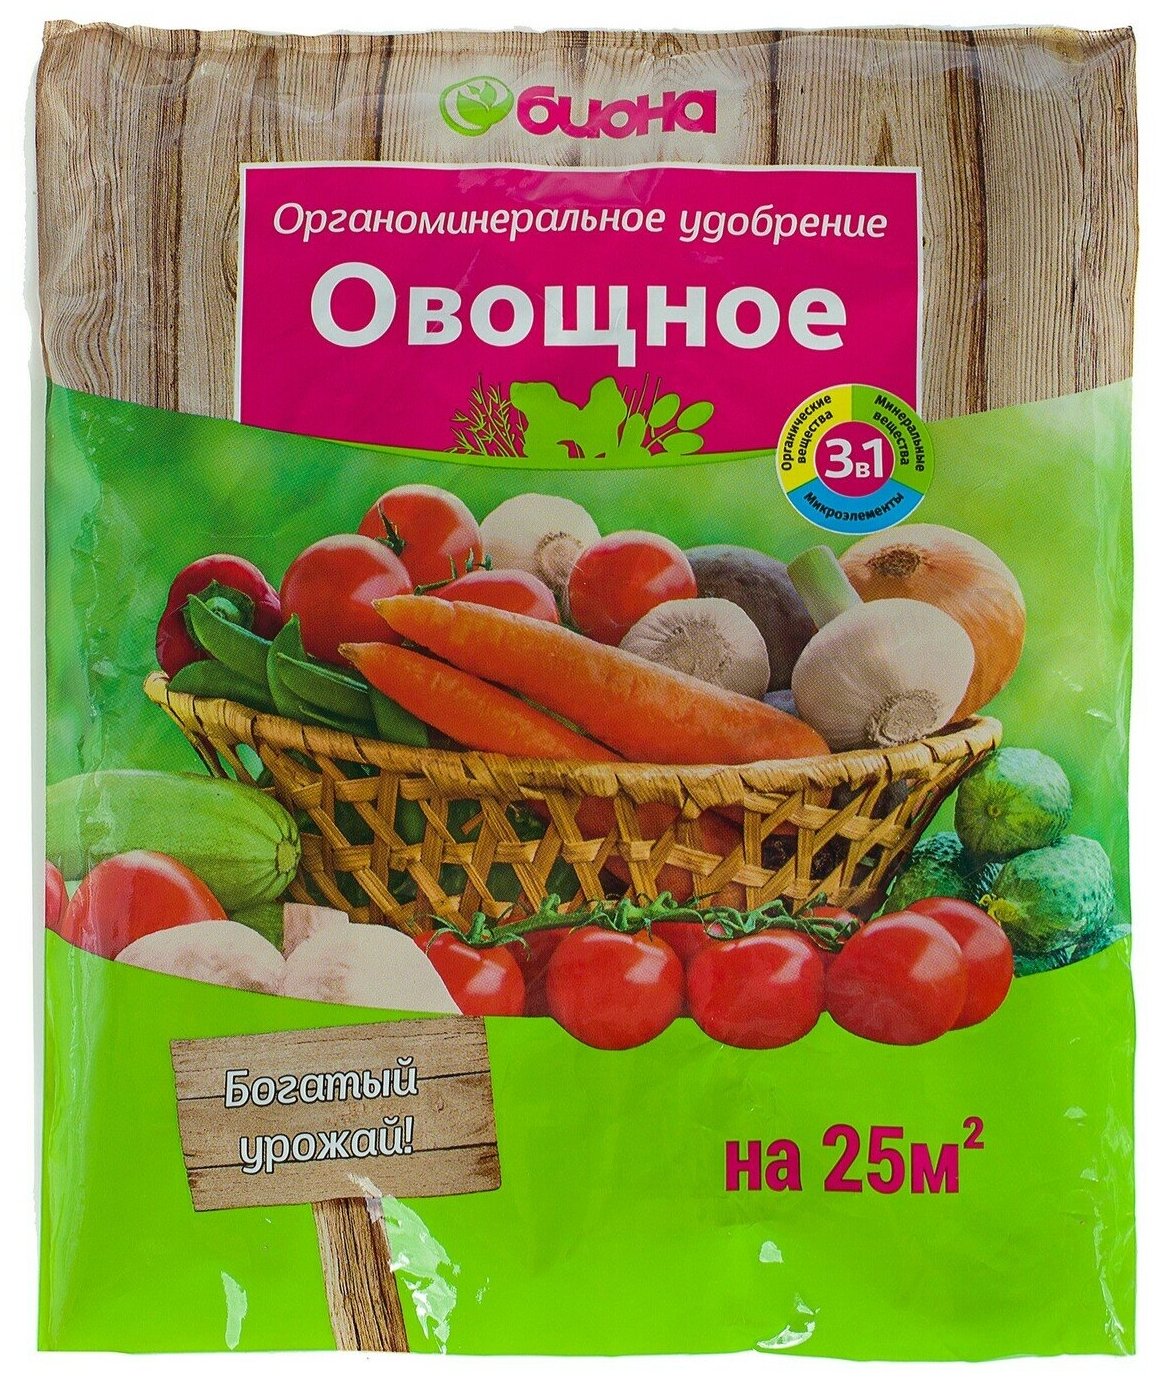 Удобрение Биона для овощей ОМУ 0.5 кг